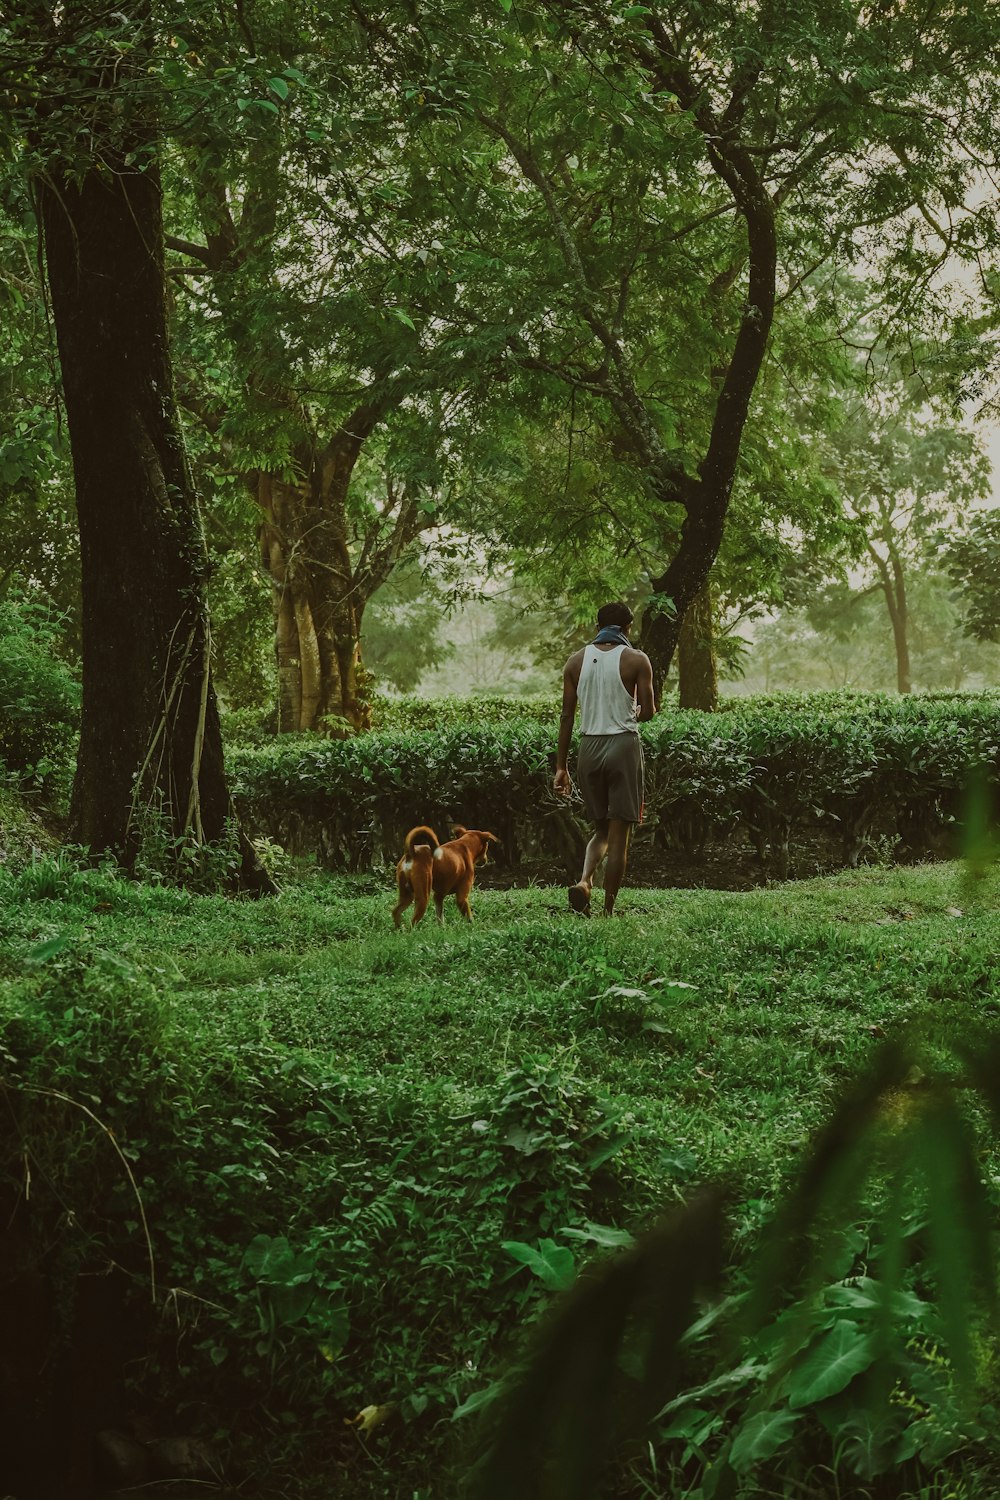 a man walking a dog through a lush green forest